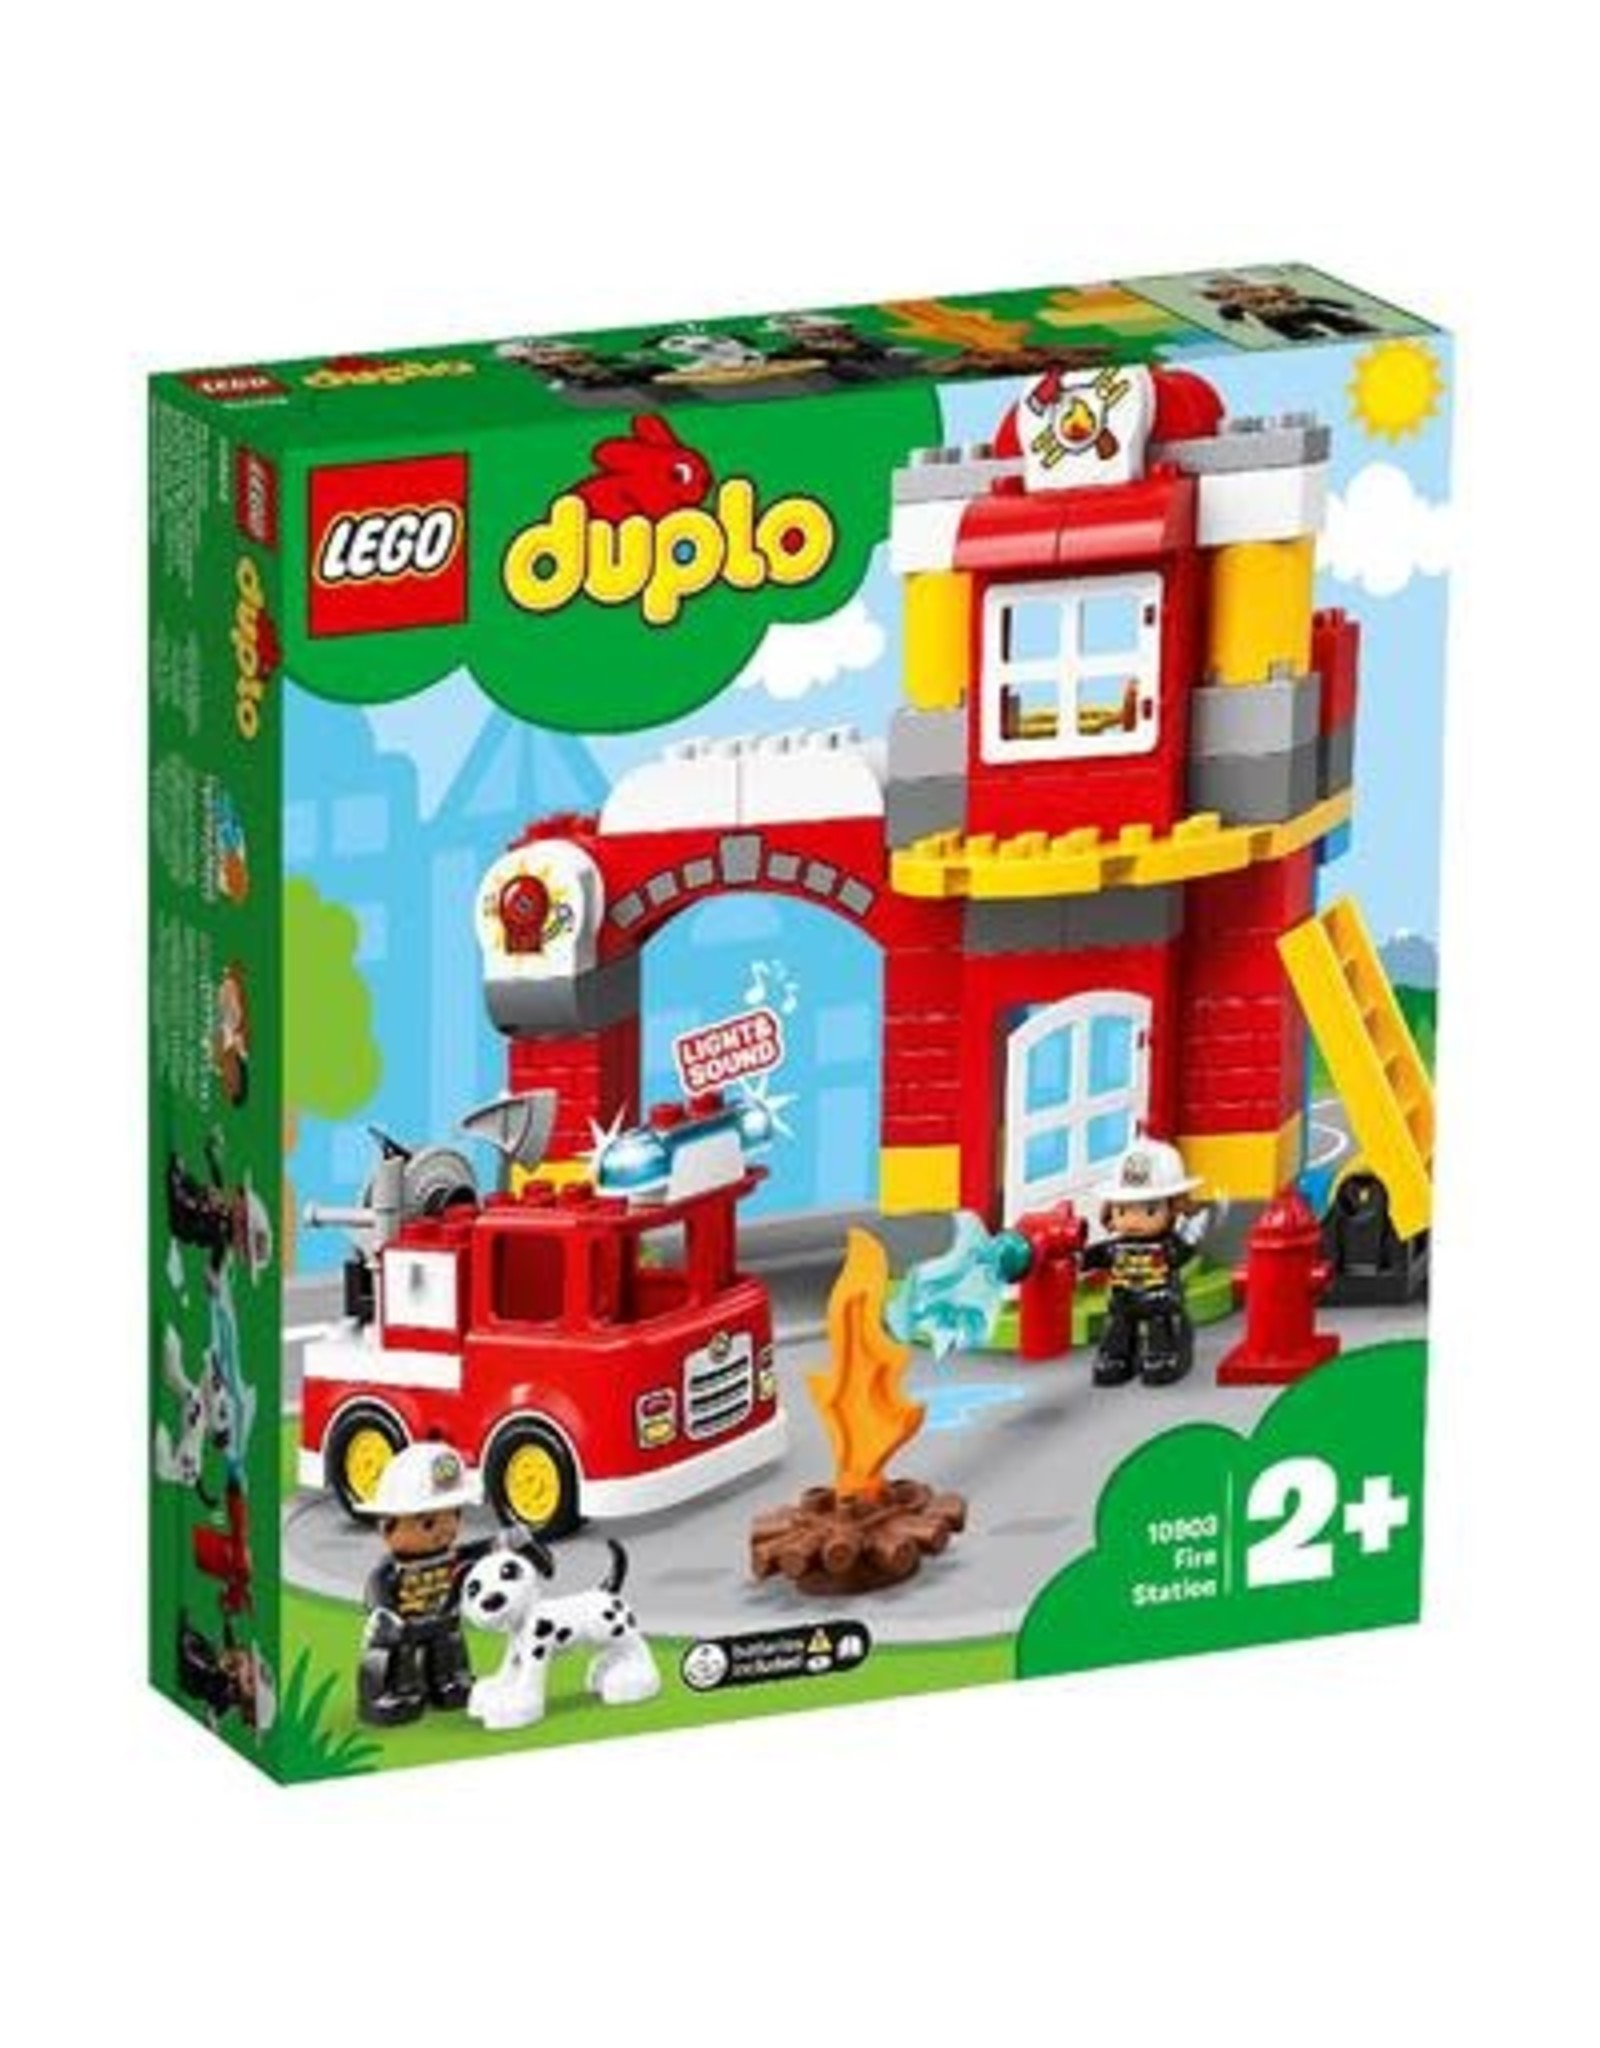 LEGO Lego Duplo 10903 brandweerstation